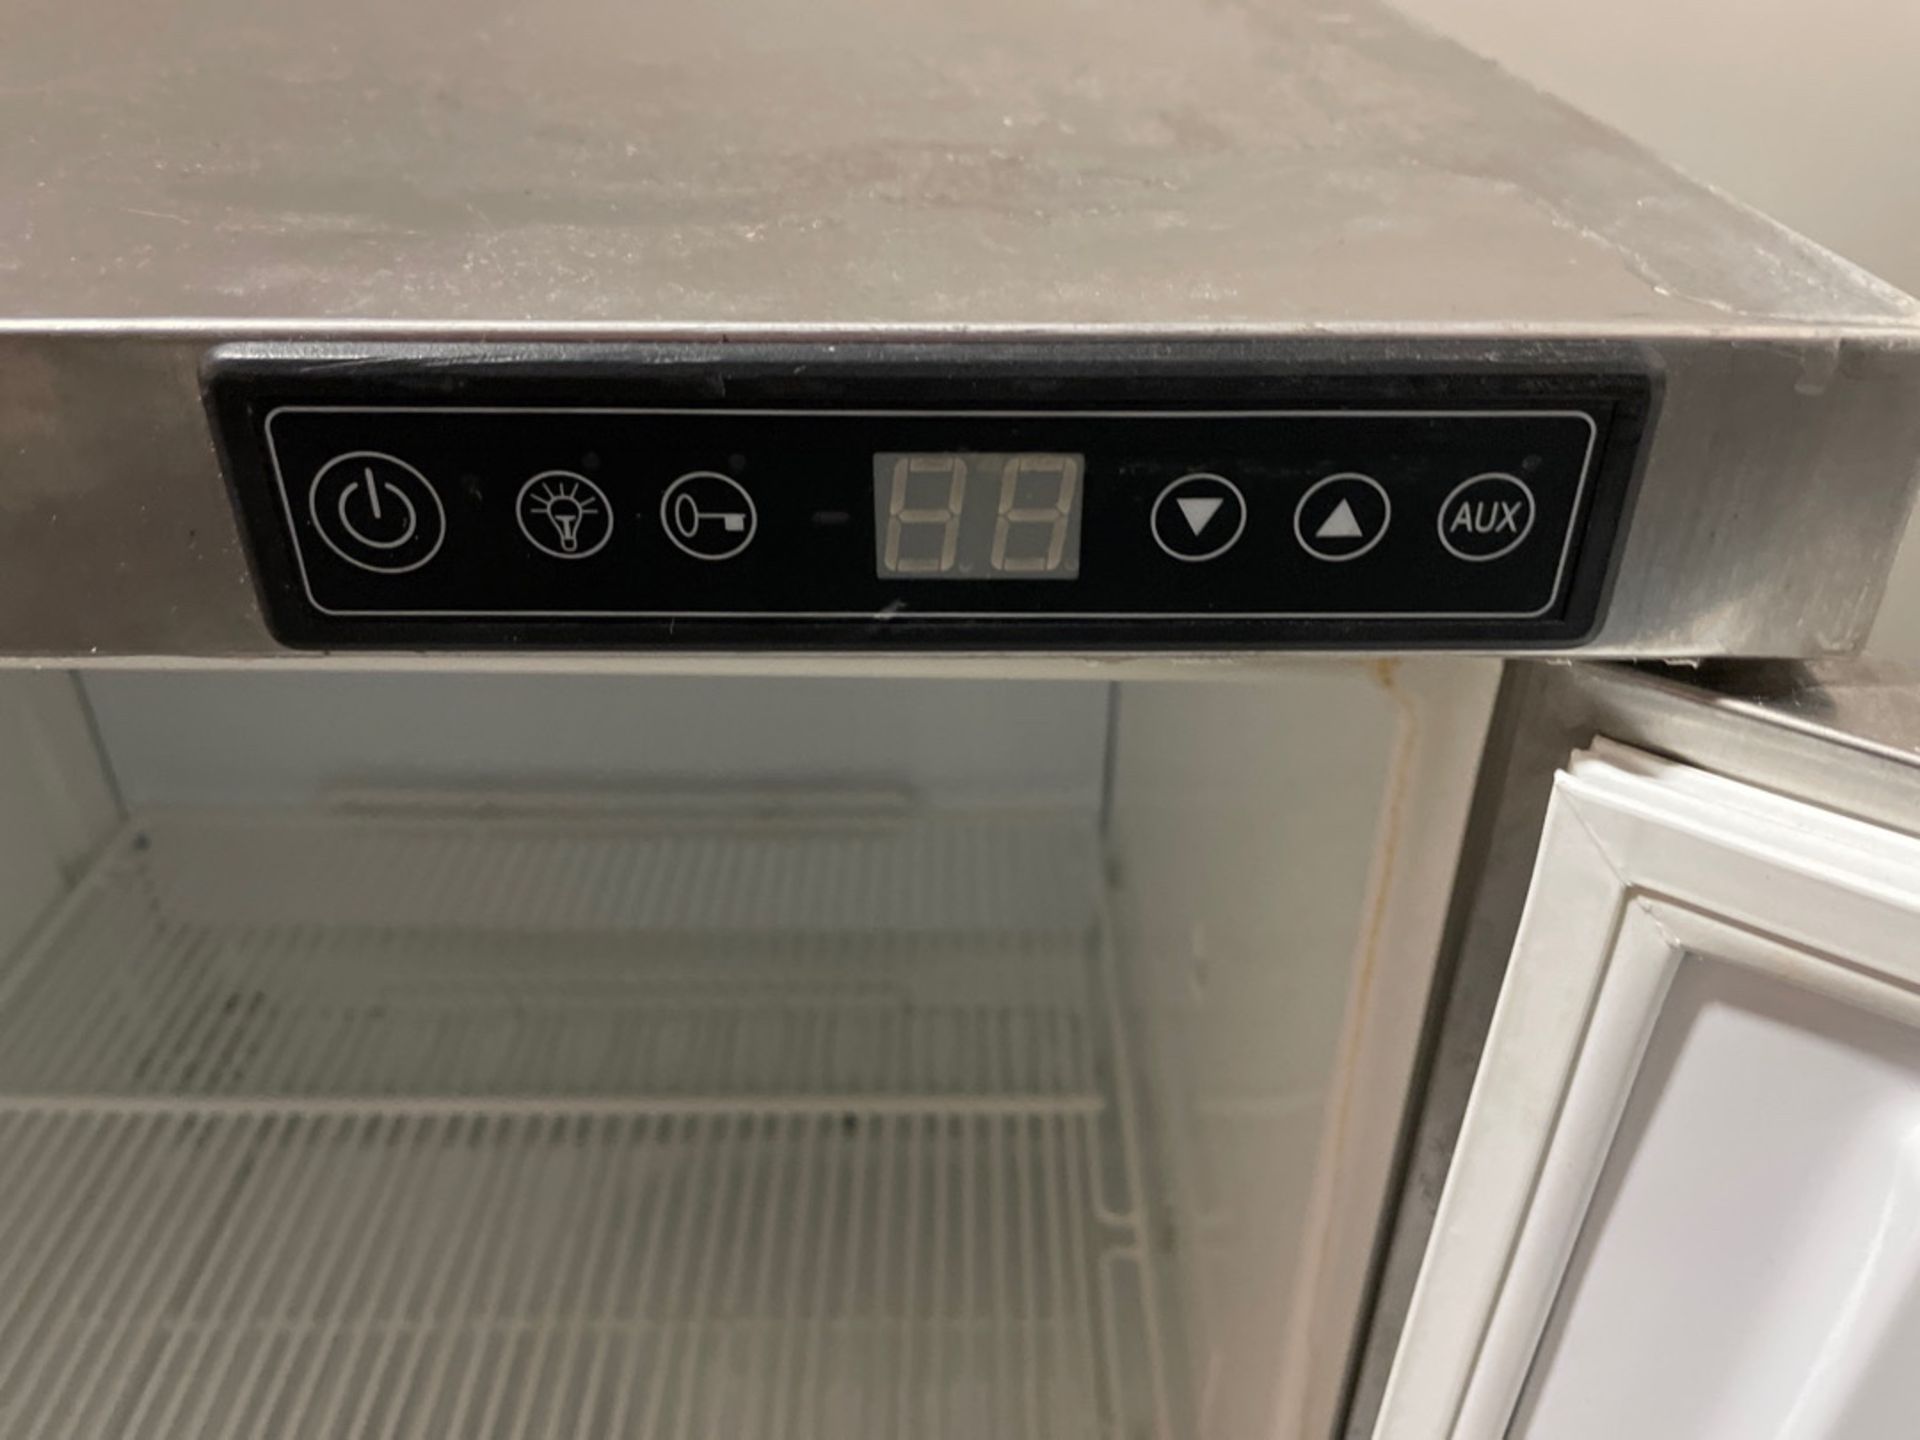 Lec G334M.02 Refrigerator - Image 3 of 4